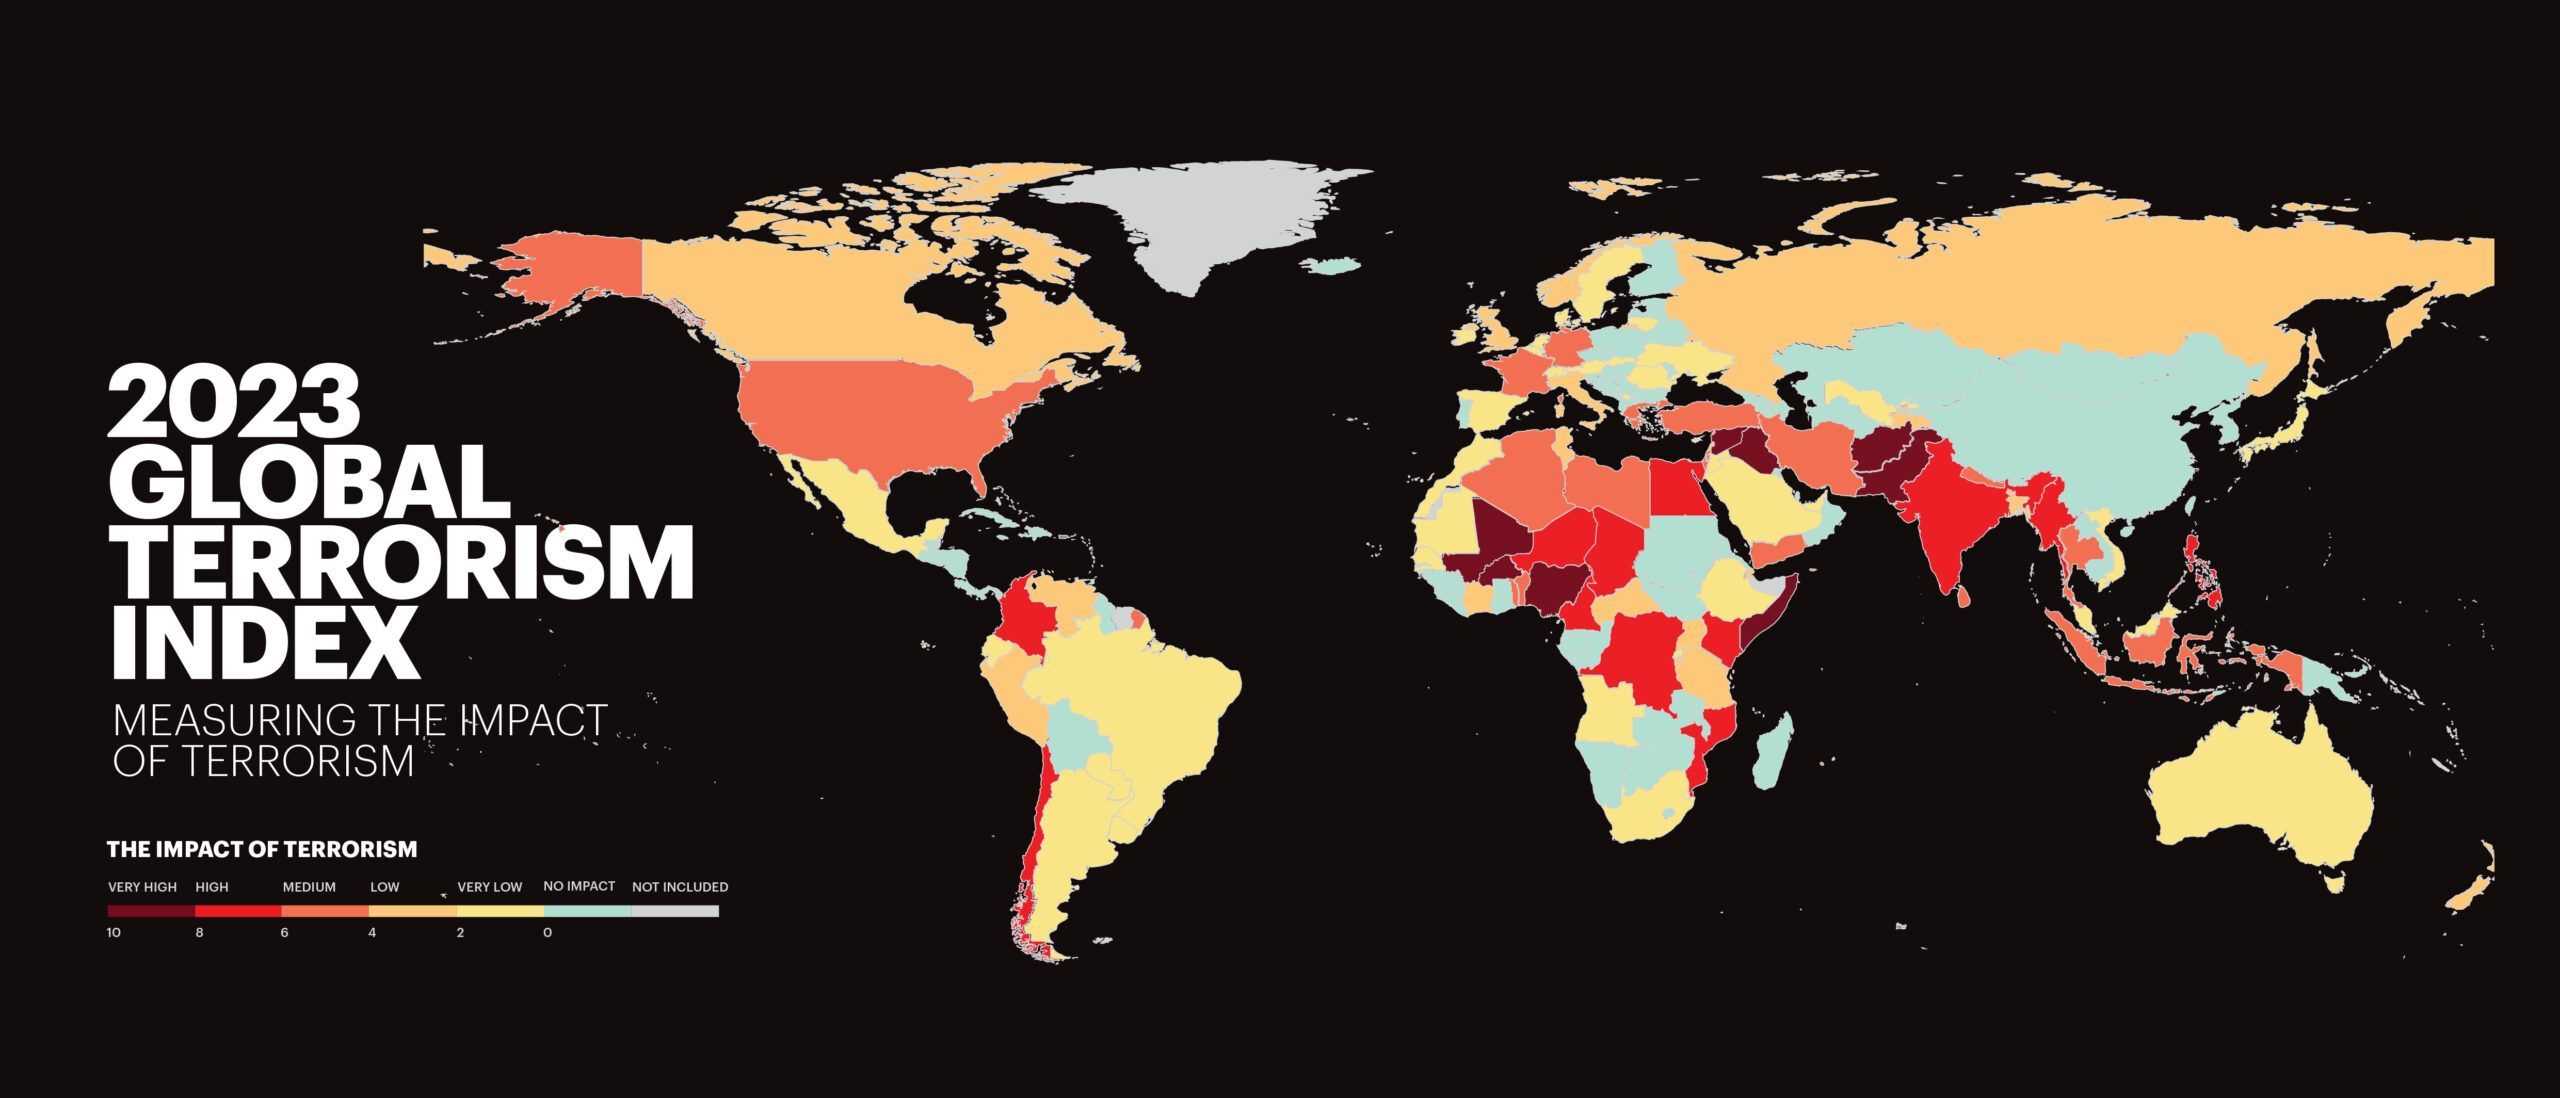 Global Terrorism Index Measuring the Impact of Terrorism Sciences Po